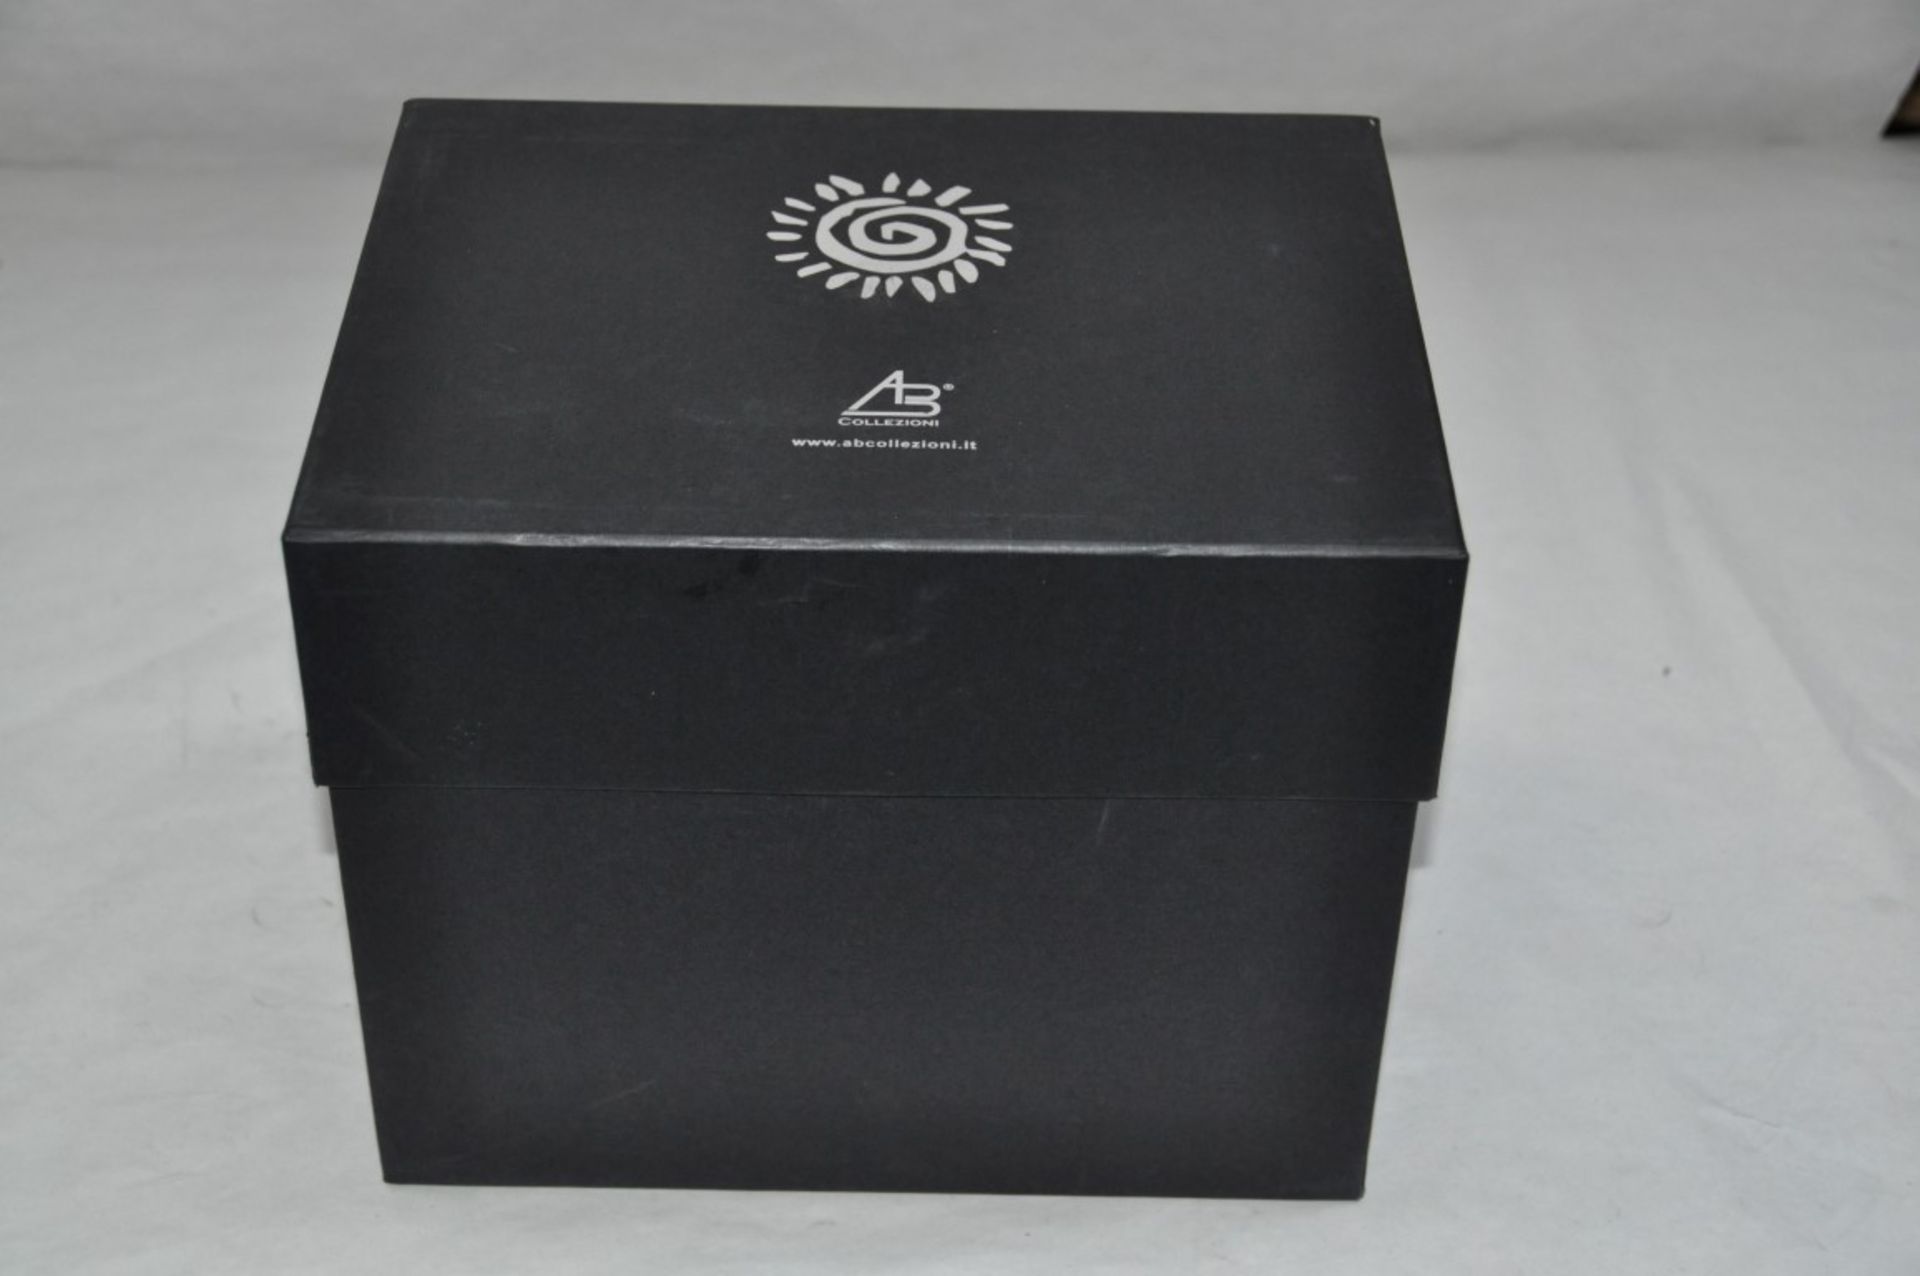 1 x "AB Collezioni" Italian Luxury Jewellery Box (31481N) - Ref LT089 – Includes Separate Vanity Set - Image 4 of 5